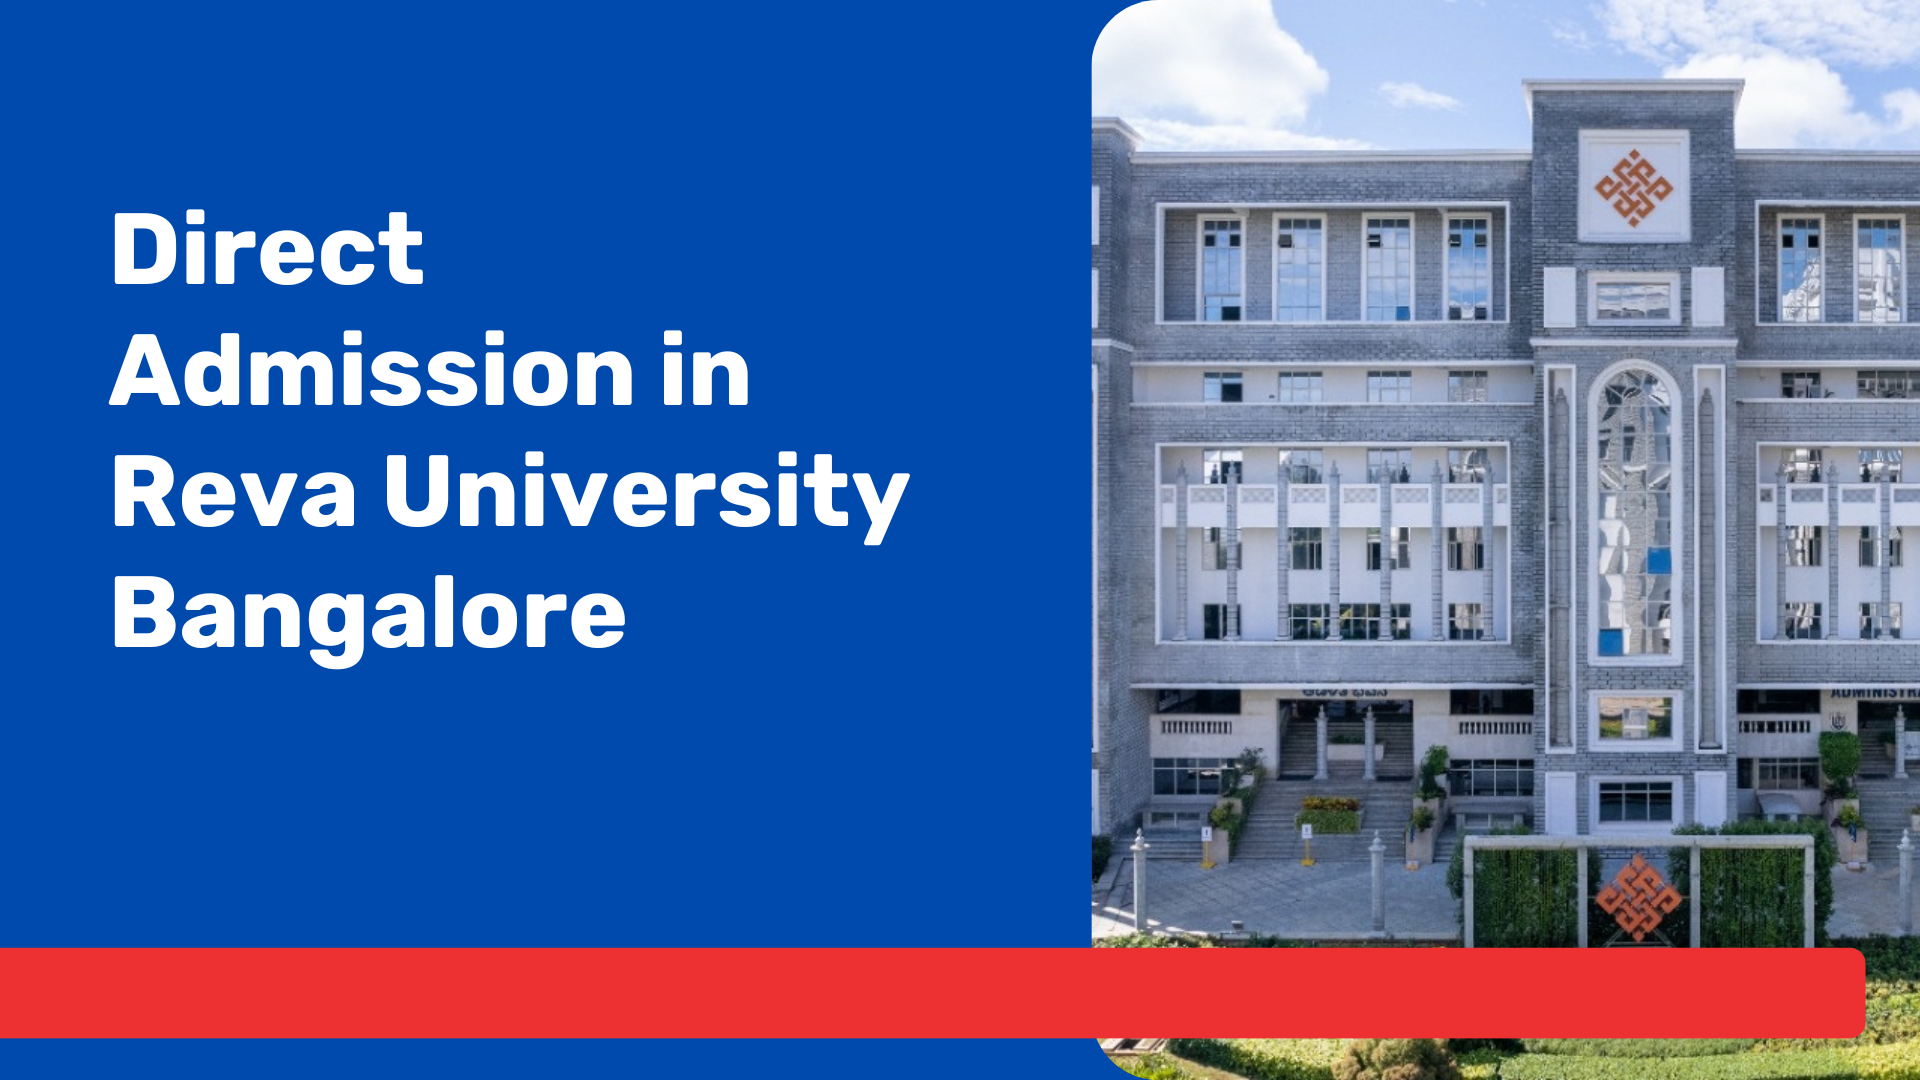 Direct Admission in Reva University Bangalore